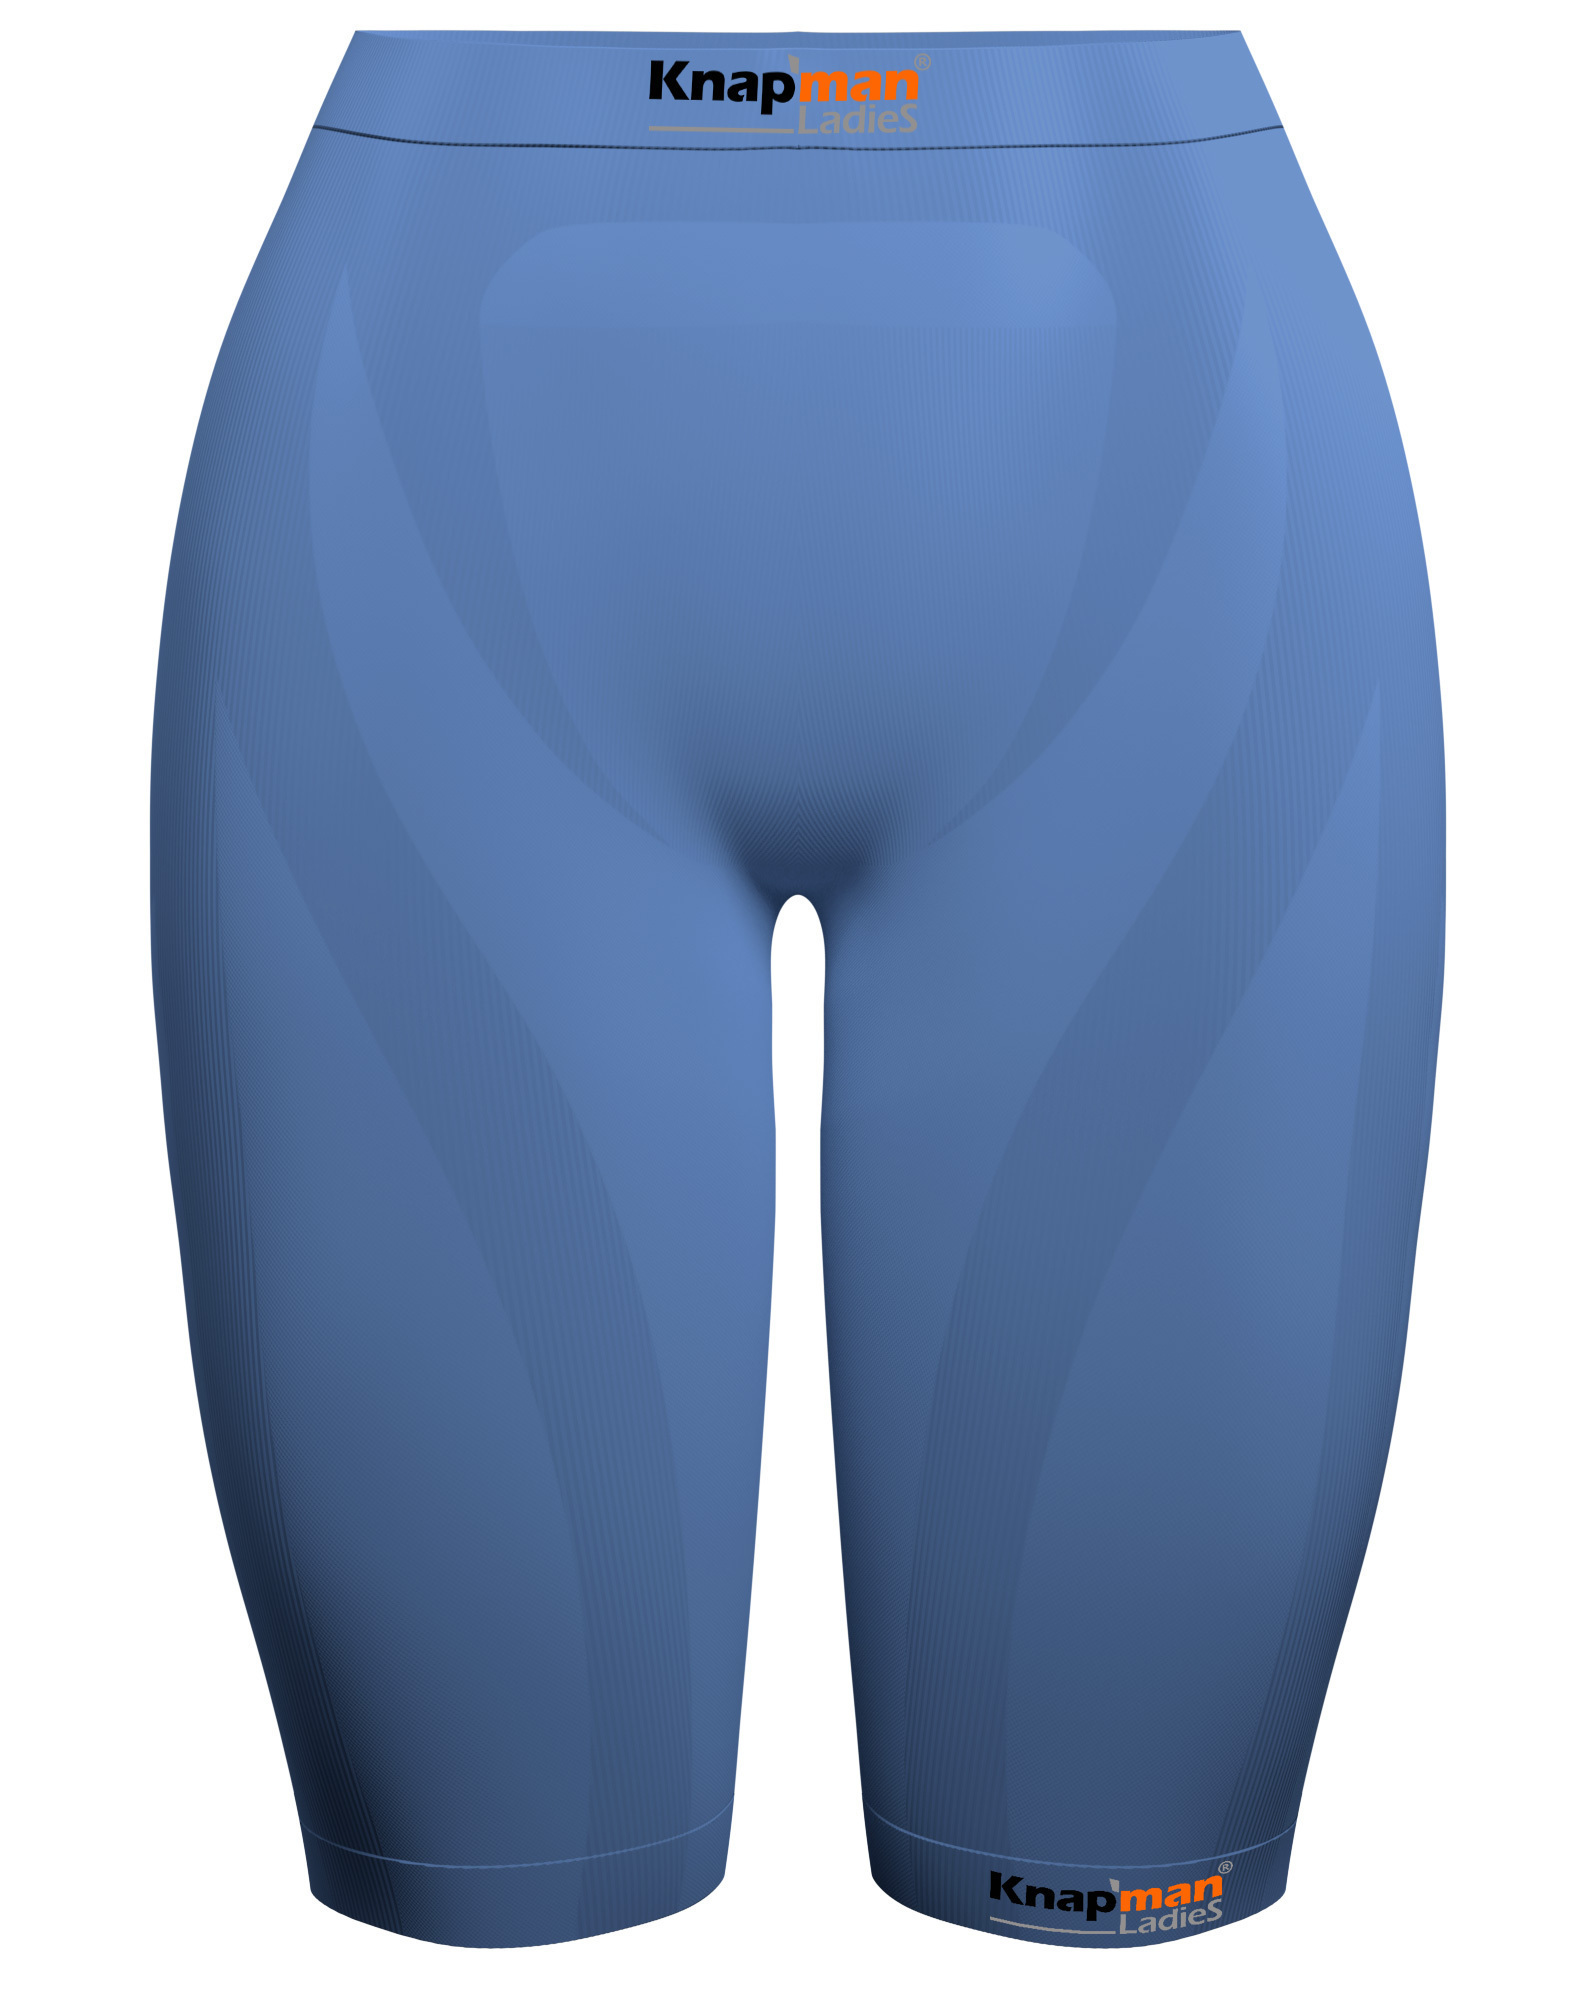 Knap'man Ladies Zoned Compression Shorts 45% light blue